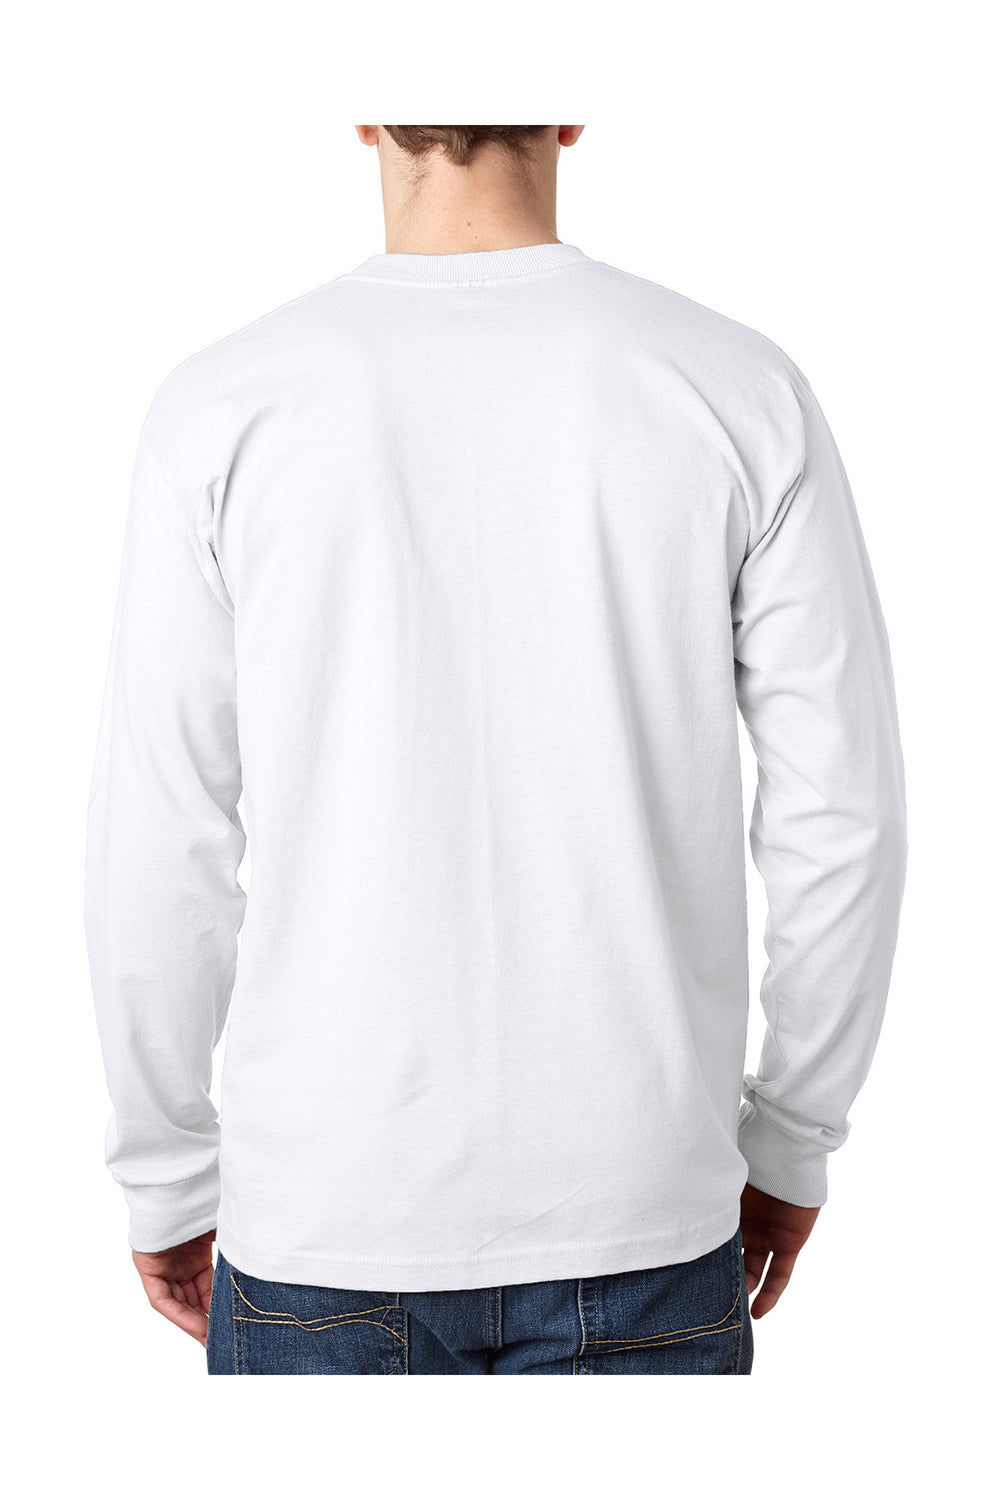 Bayside BA8100 Mens USA Made Long Sleeve Crewneck T-Shirt w/ Pocket White Model Back